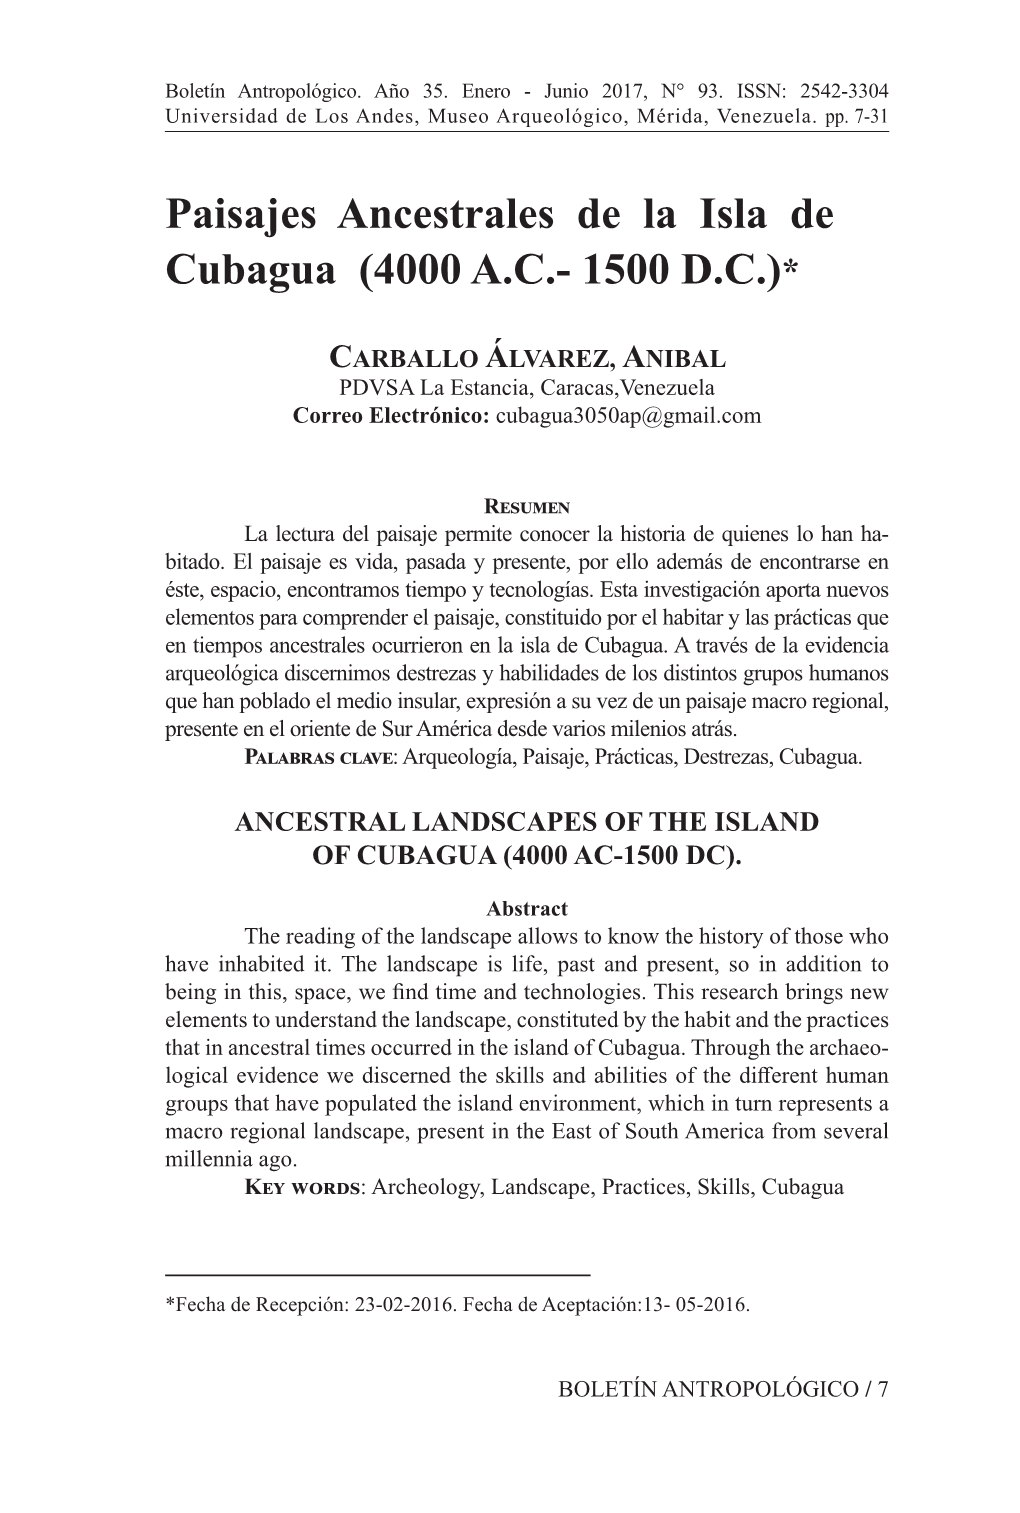 Paisajes Ancestrales De La Isla De Cubagua (4000 A.C.- 1500 D.C.)*